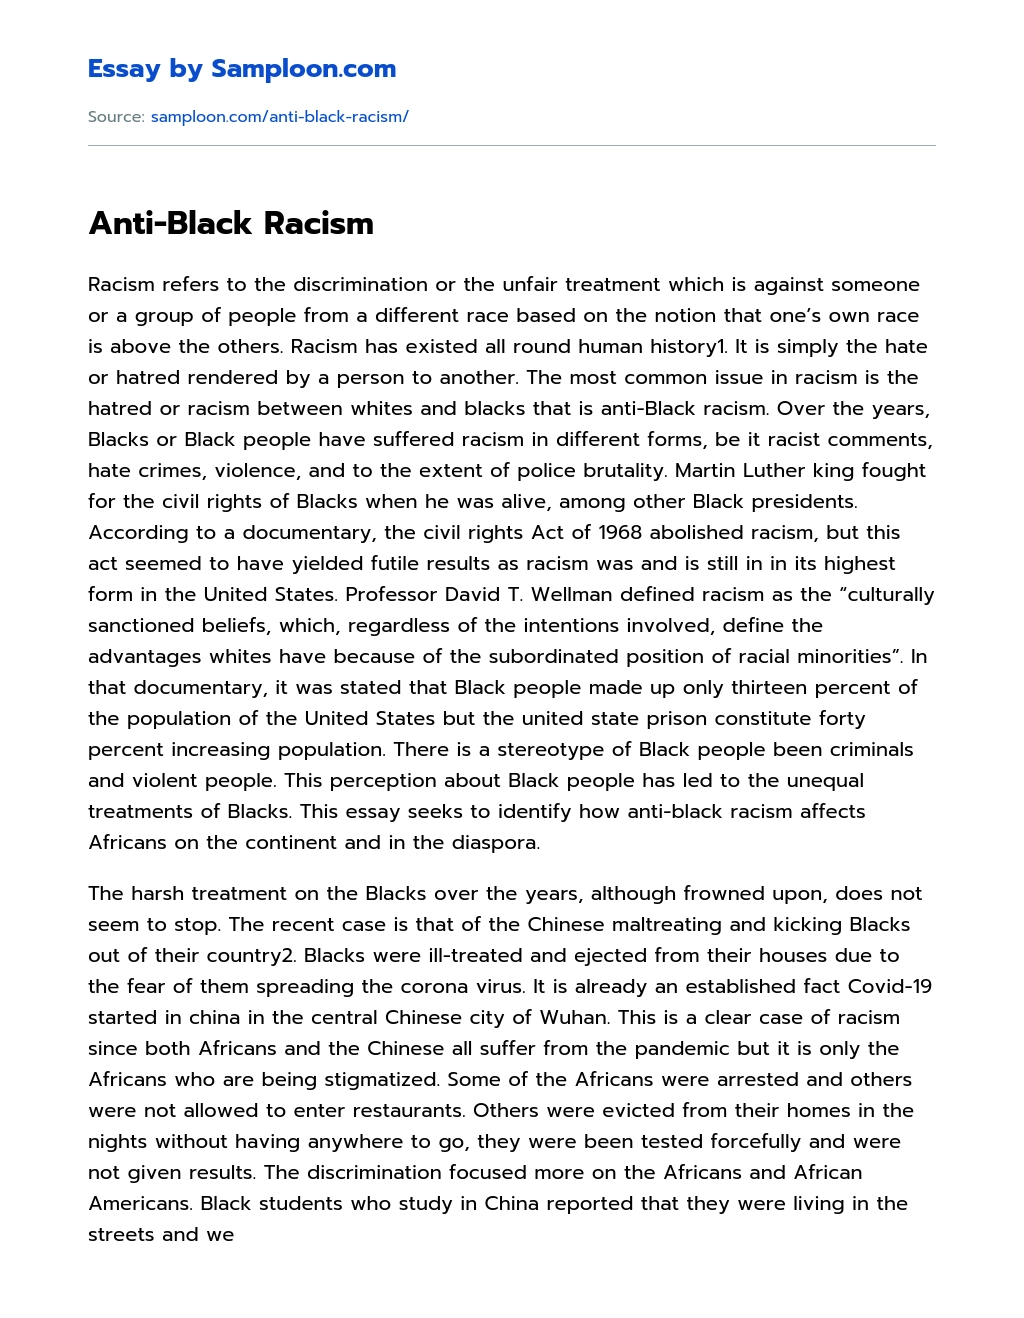 Anti-Black Racism essay